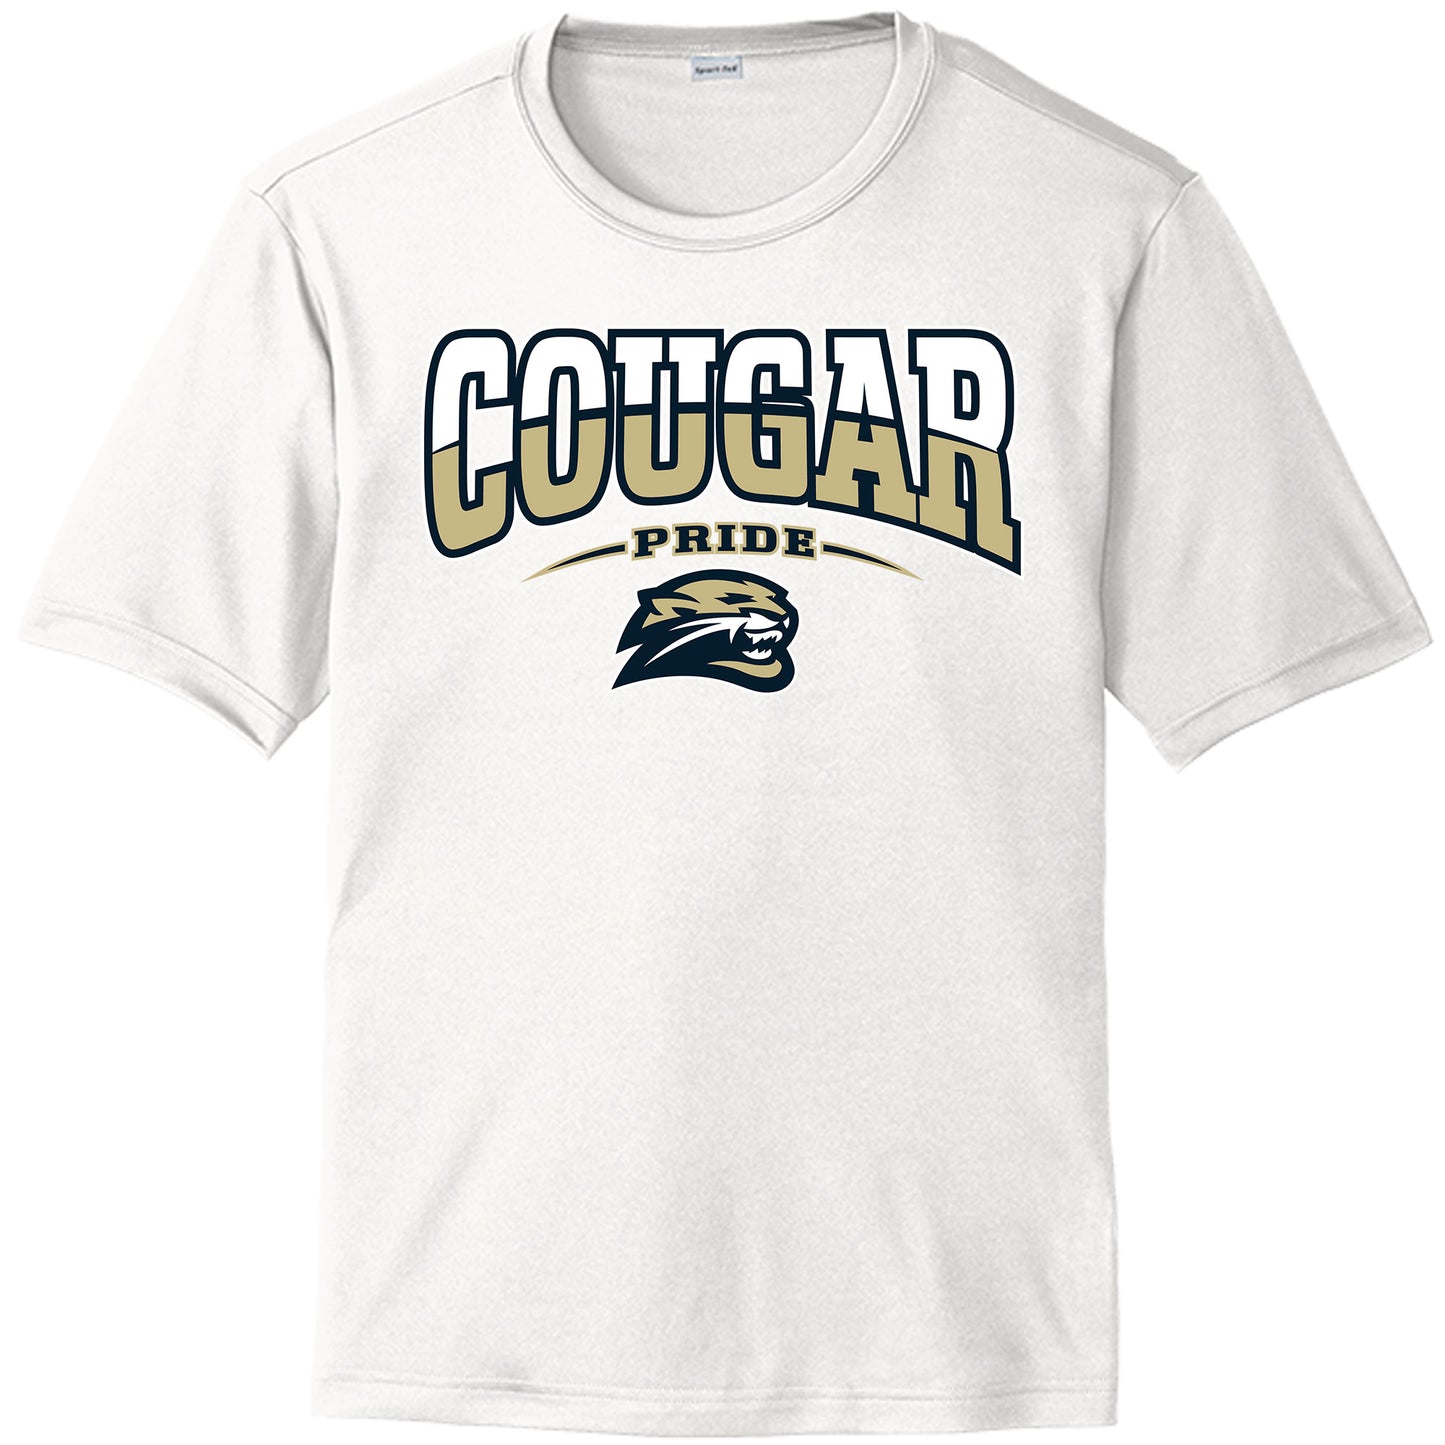 Durant High School Drifit Shirt  "Cougars Pride"